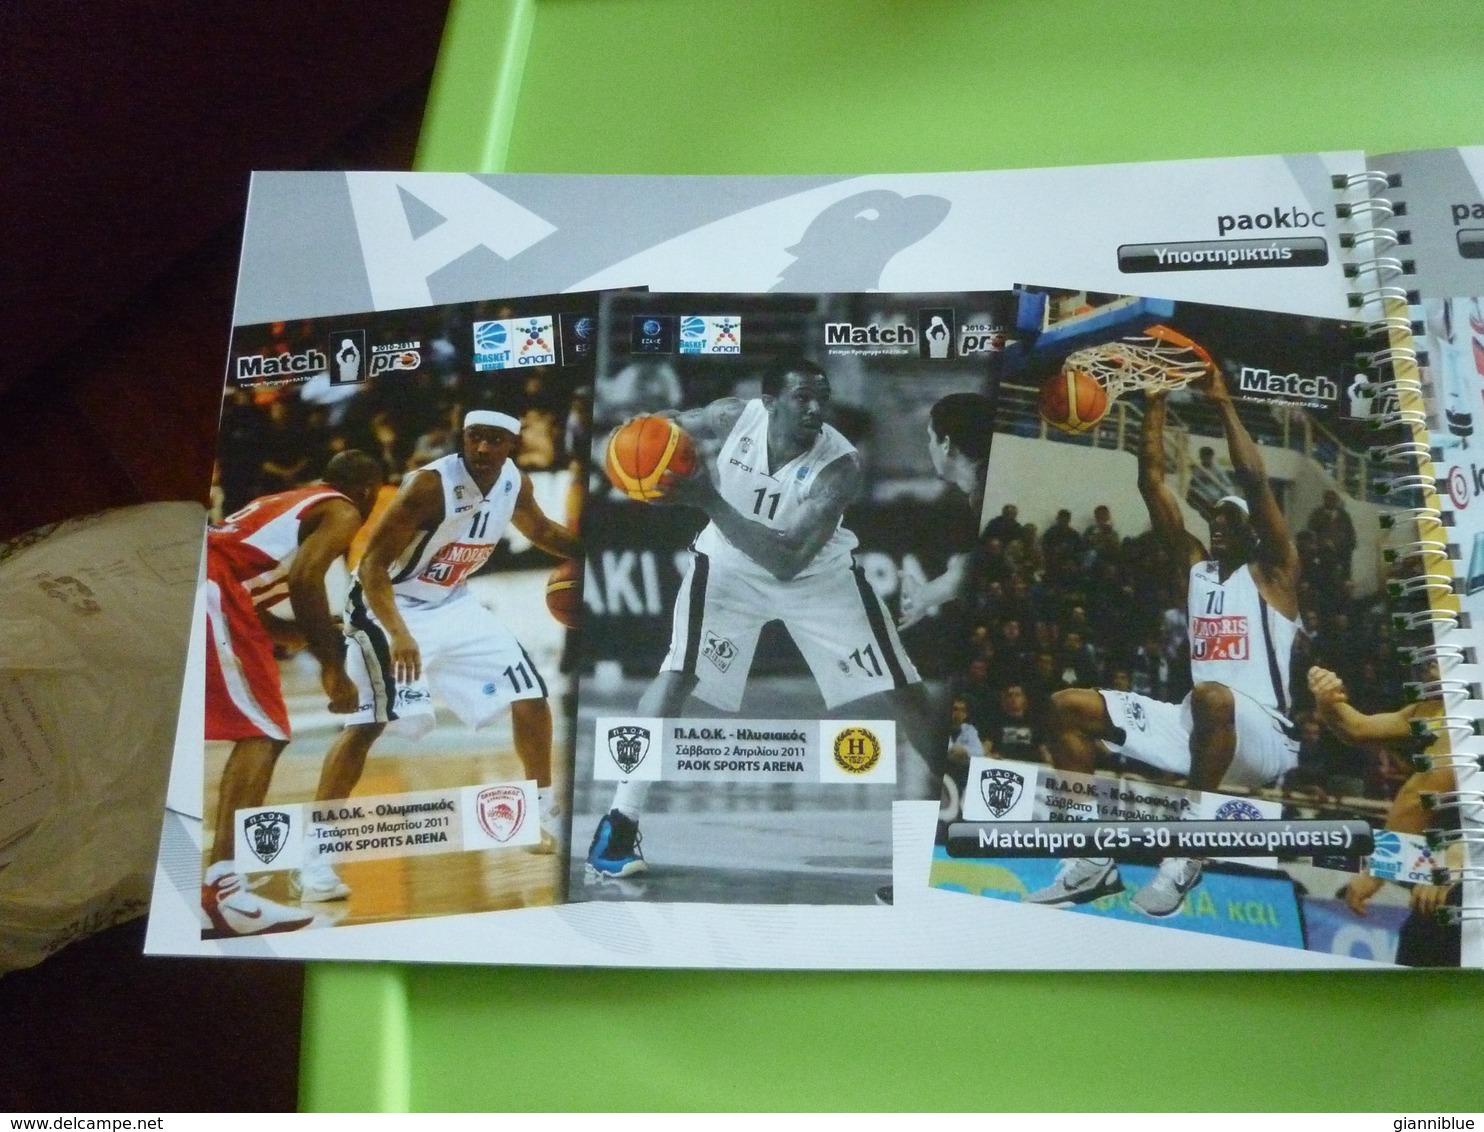 PAOK Thessaloniki basketball team hard cover sponsor book